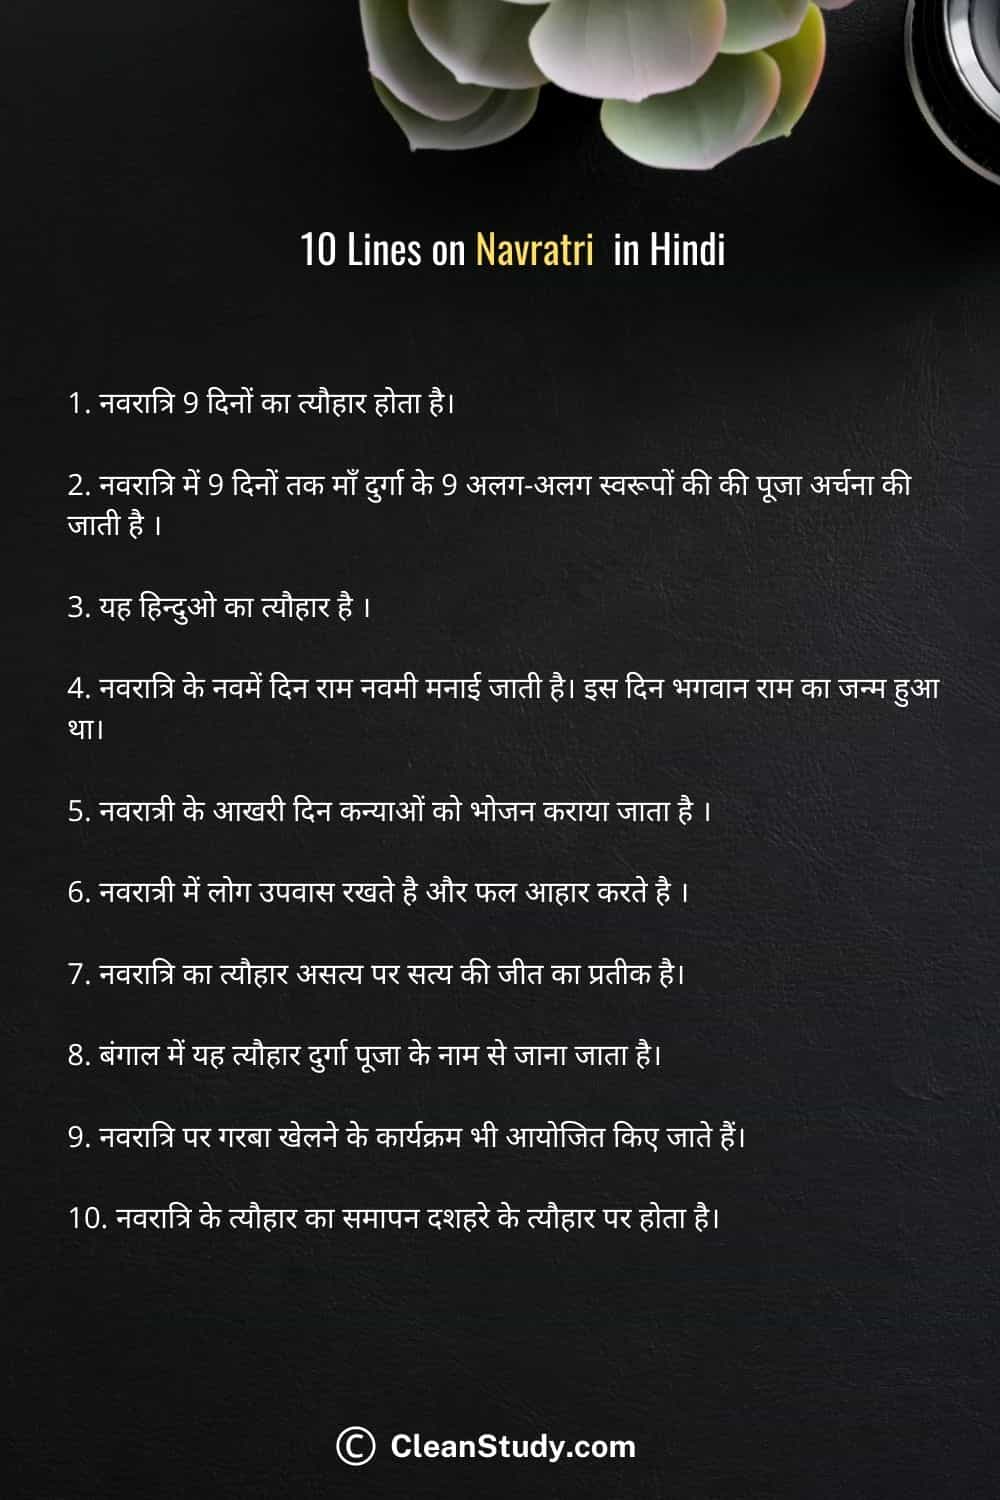 10 Lines on Navratri in Hindi